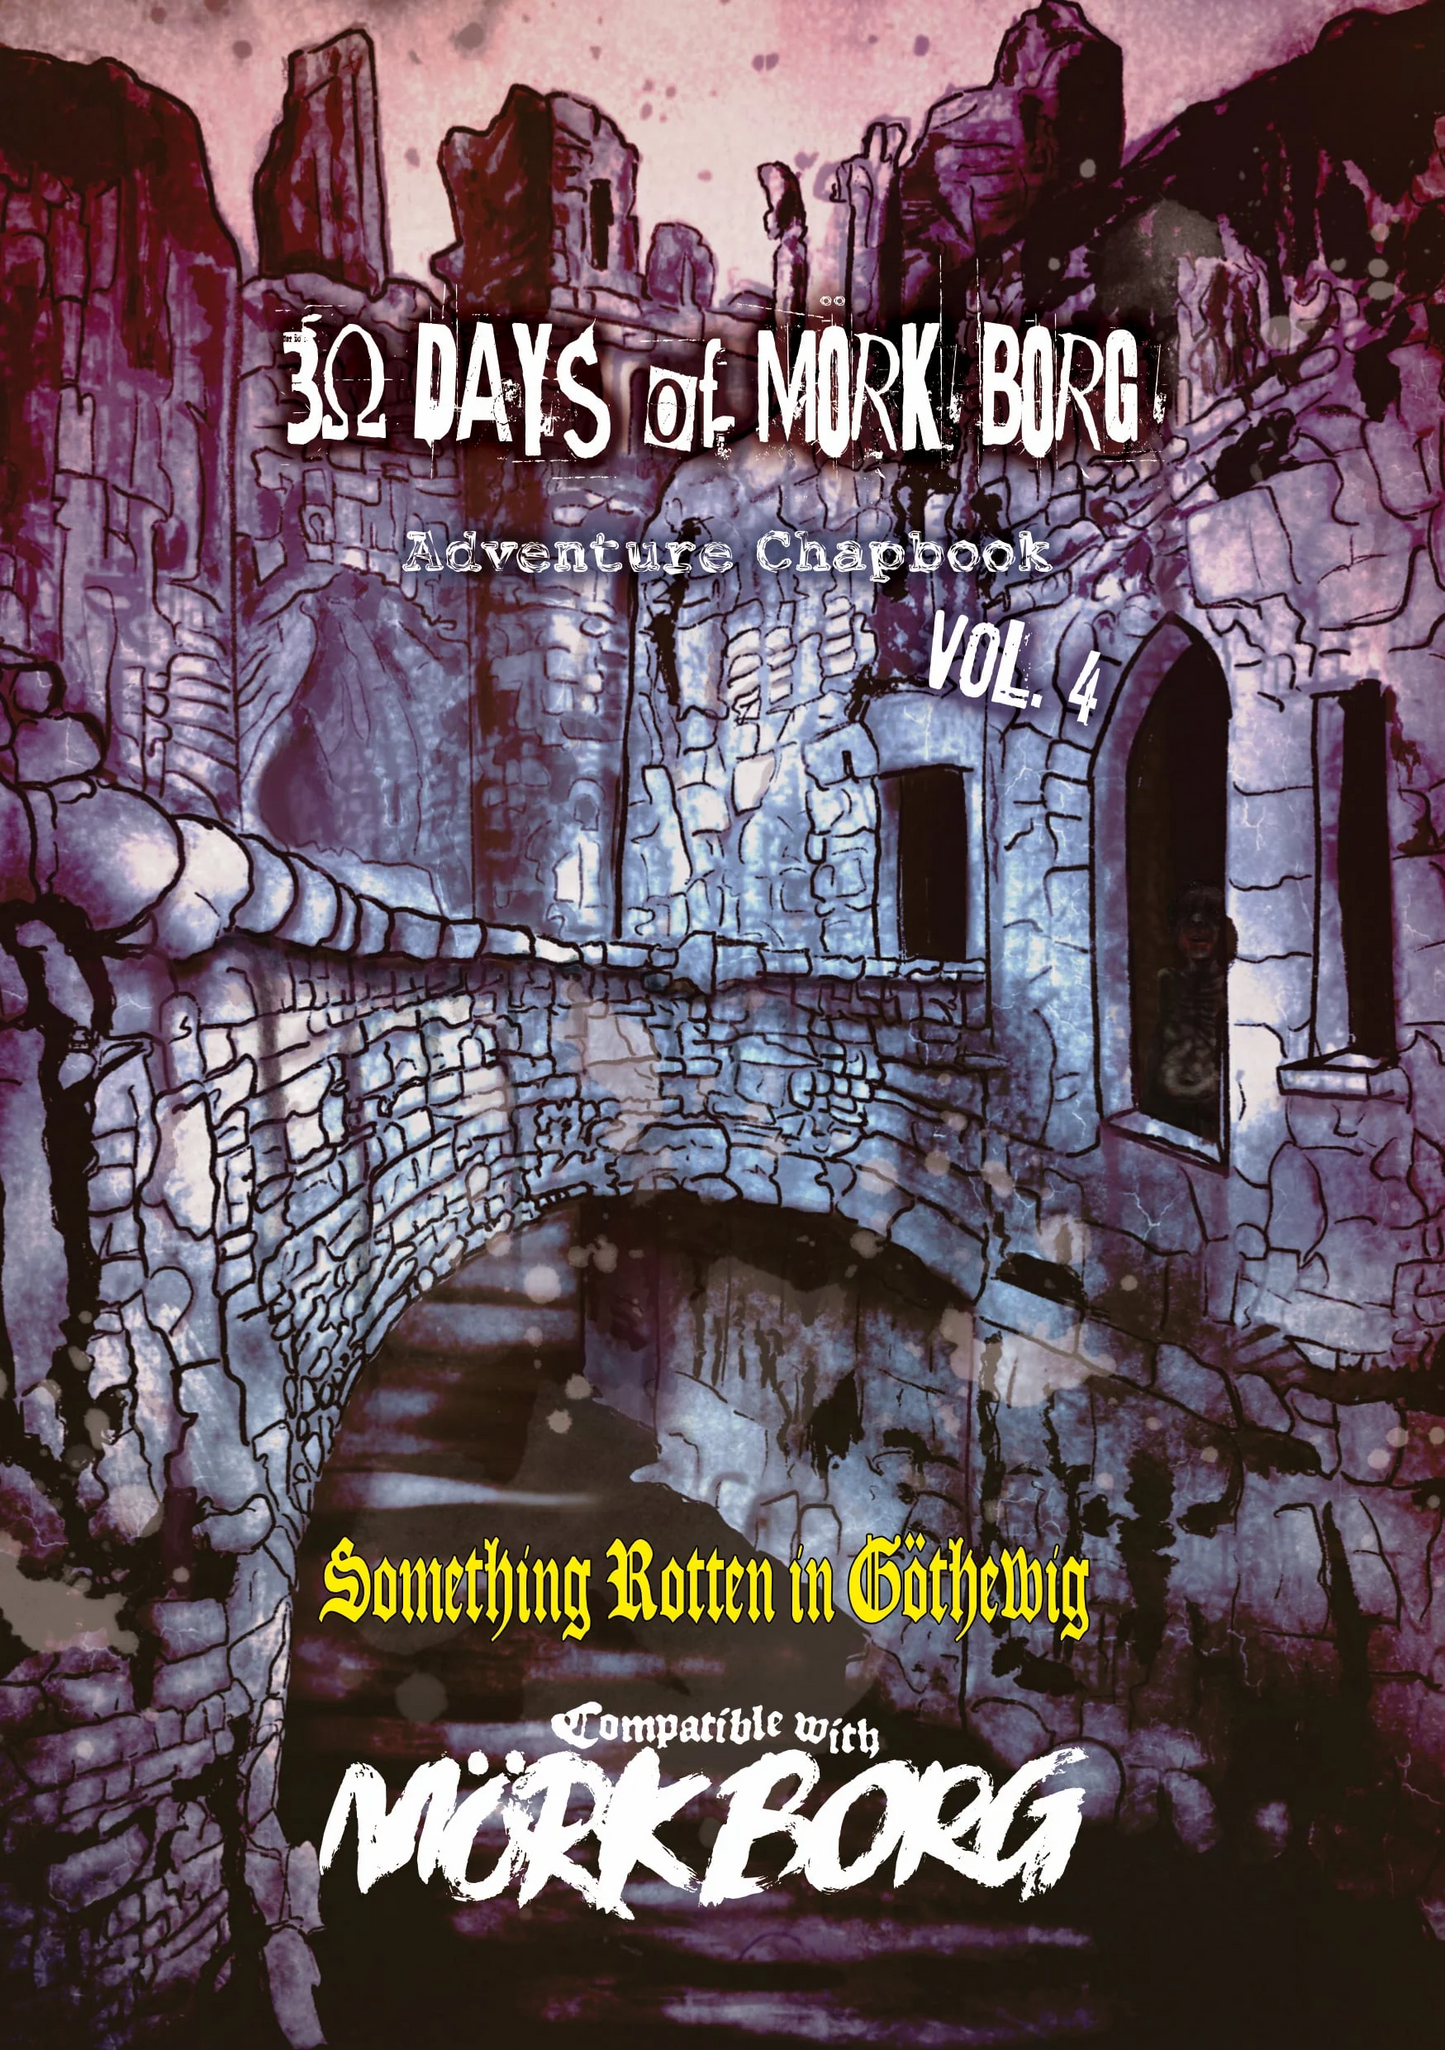 30 DAYS OF MORK BORG VOL 4